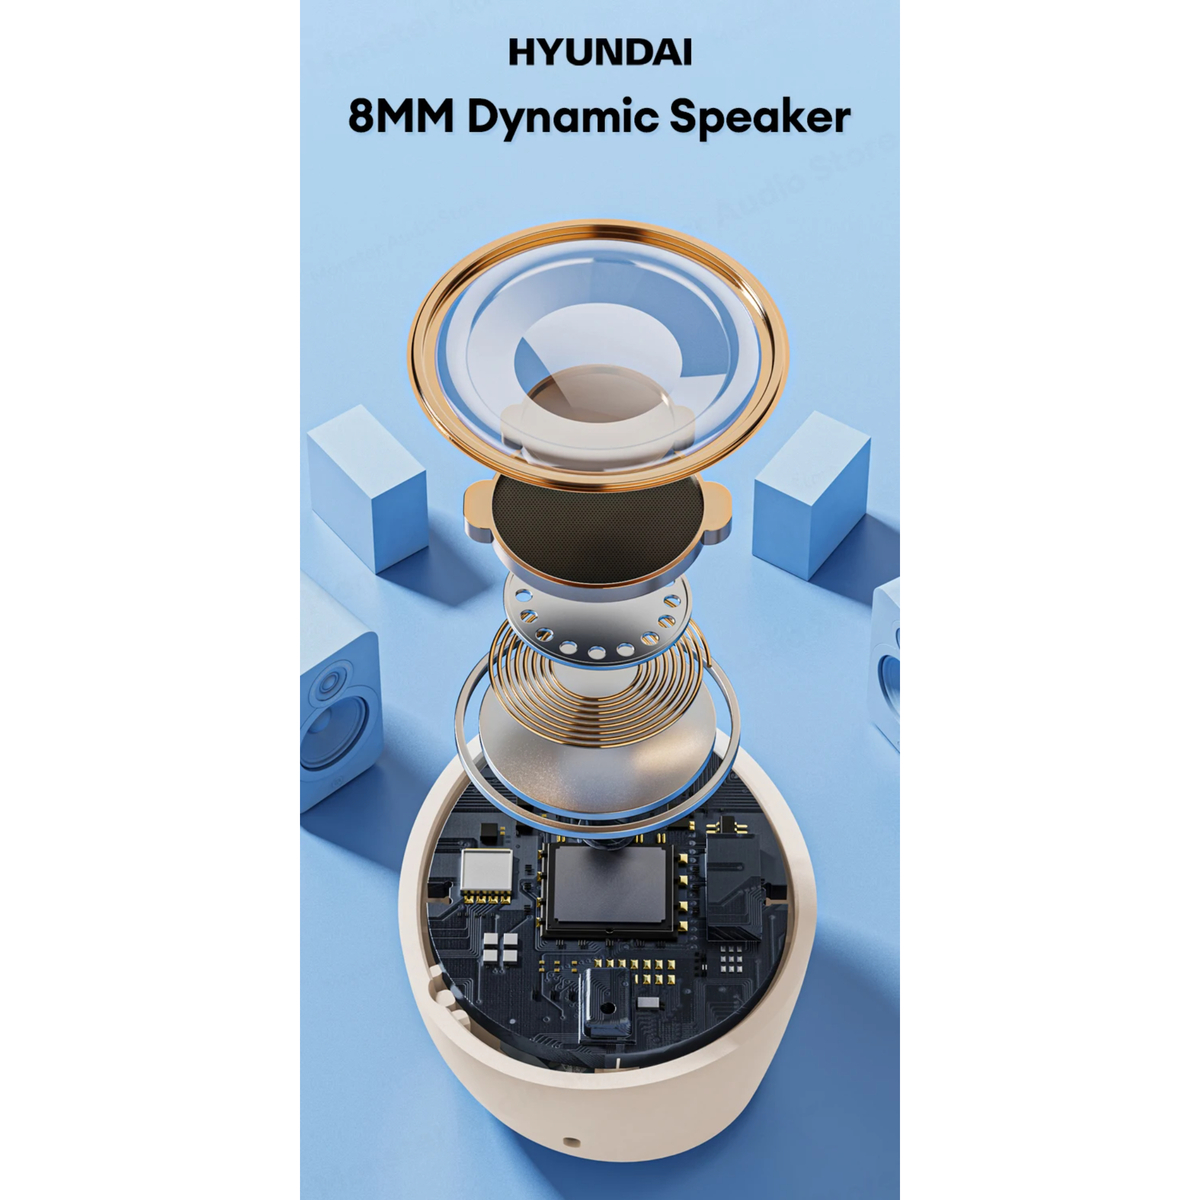 Hyundai HY-T11 True Wireless Earbuds White